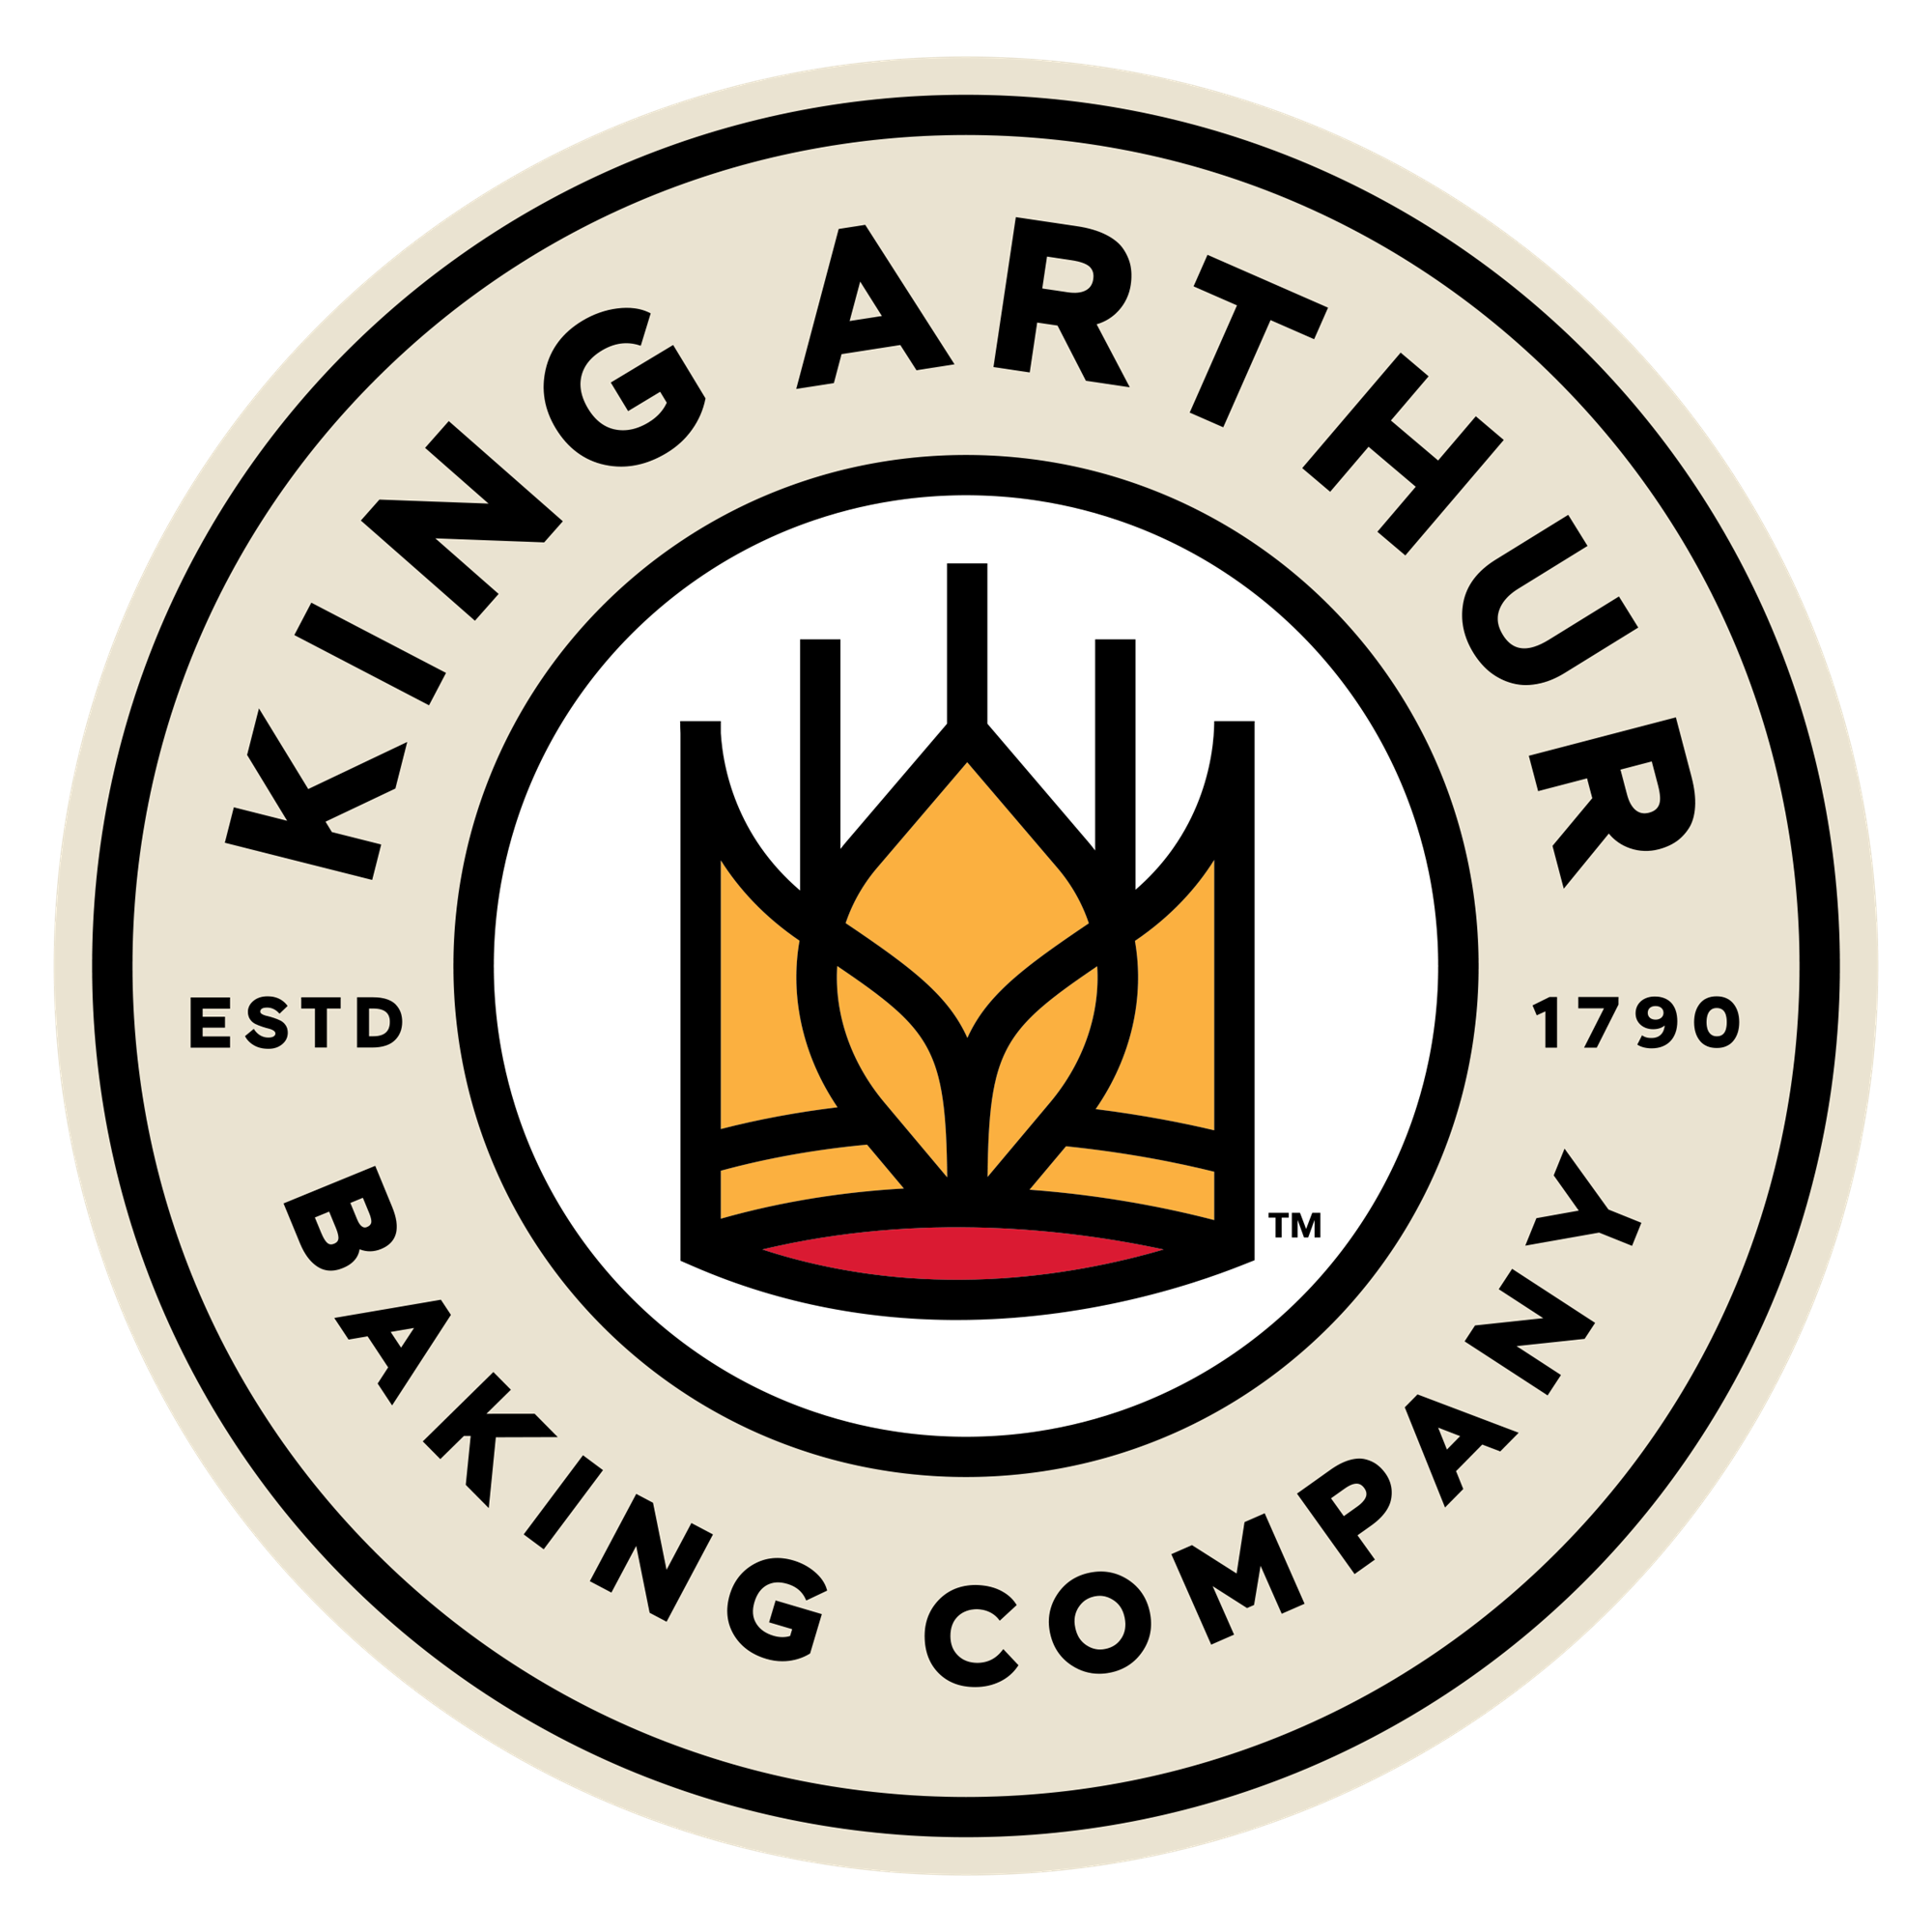 King Arthur Baking Contest